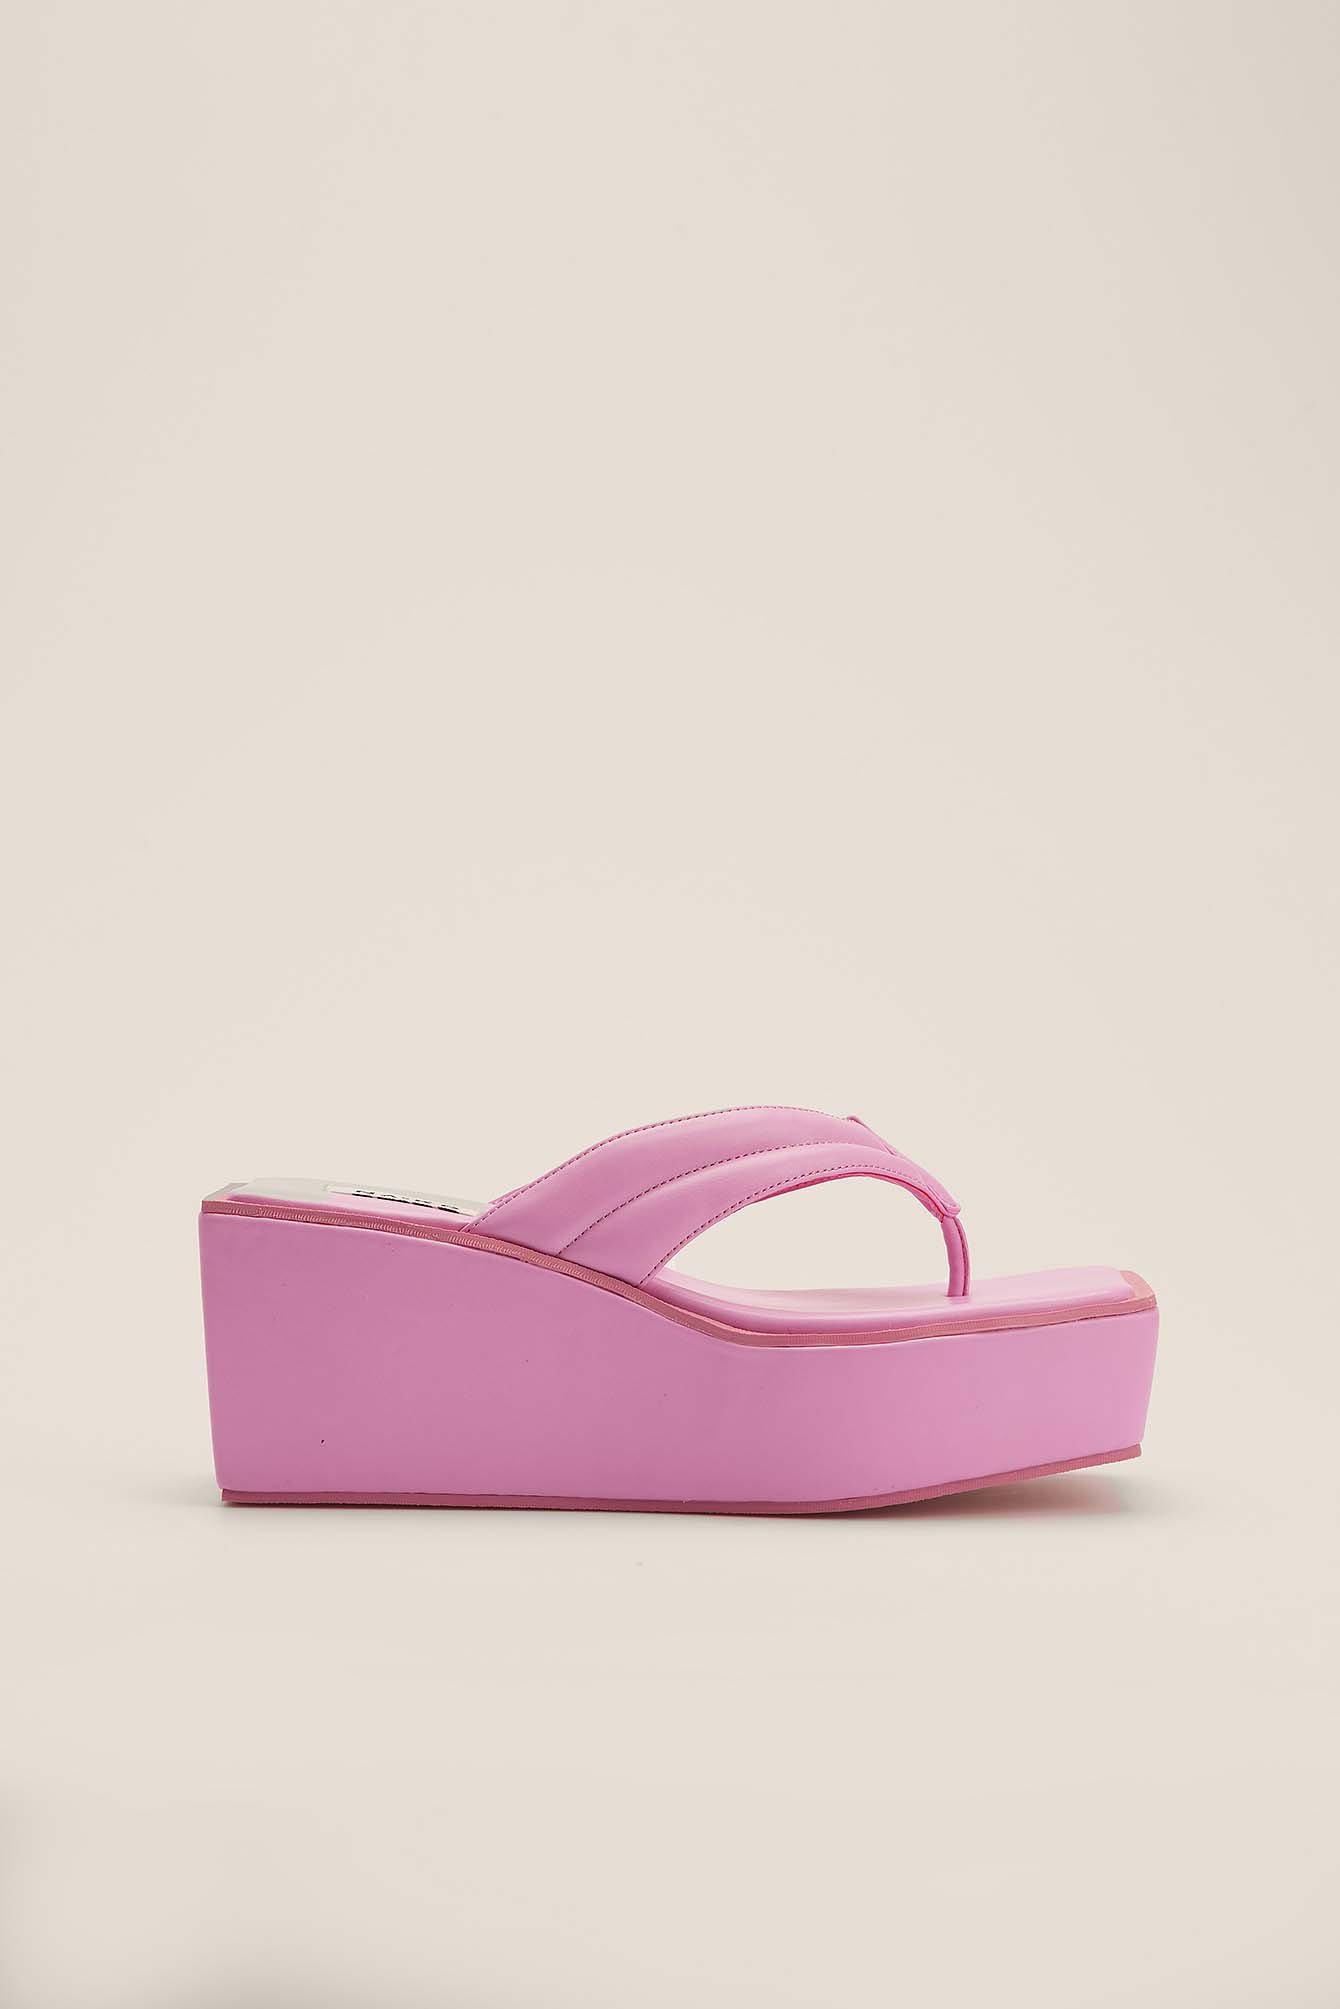 Schoenen Sandalen Flip flop sandalen SaHara Flip flop sandalen roze casual uitstraling 